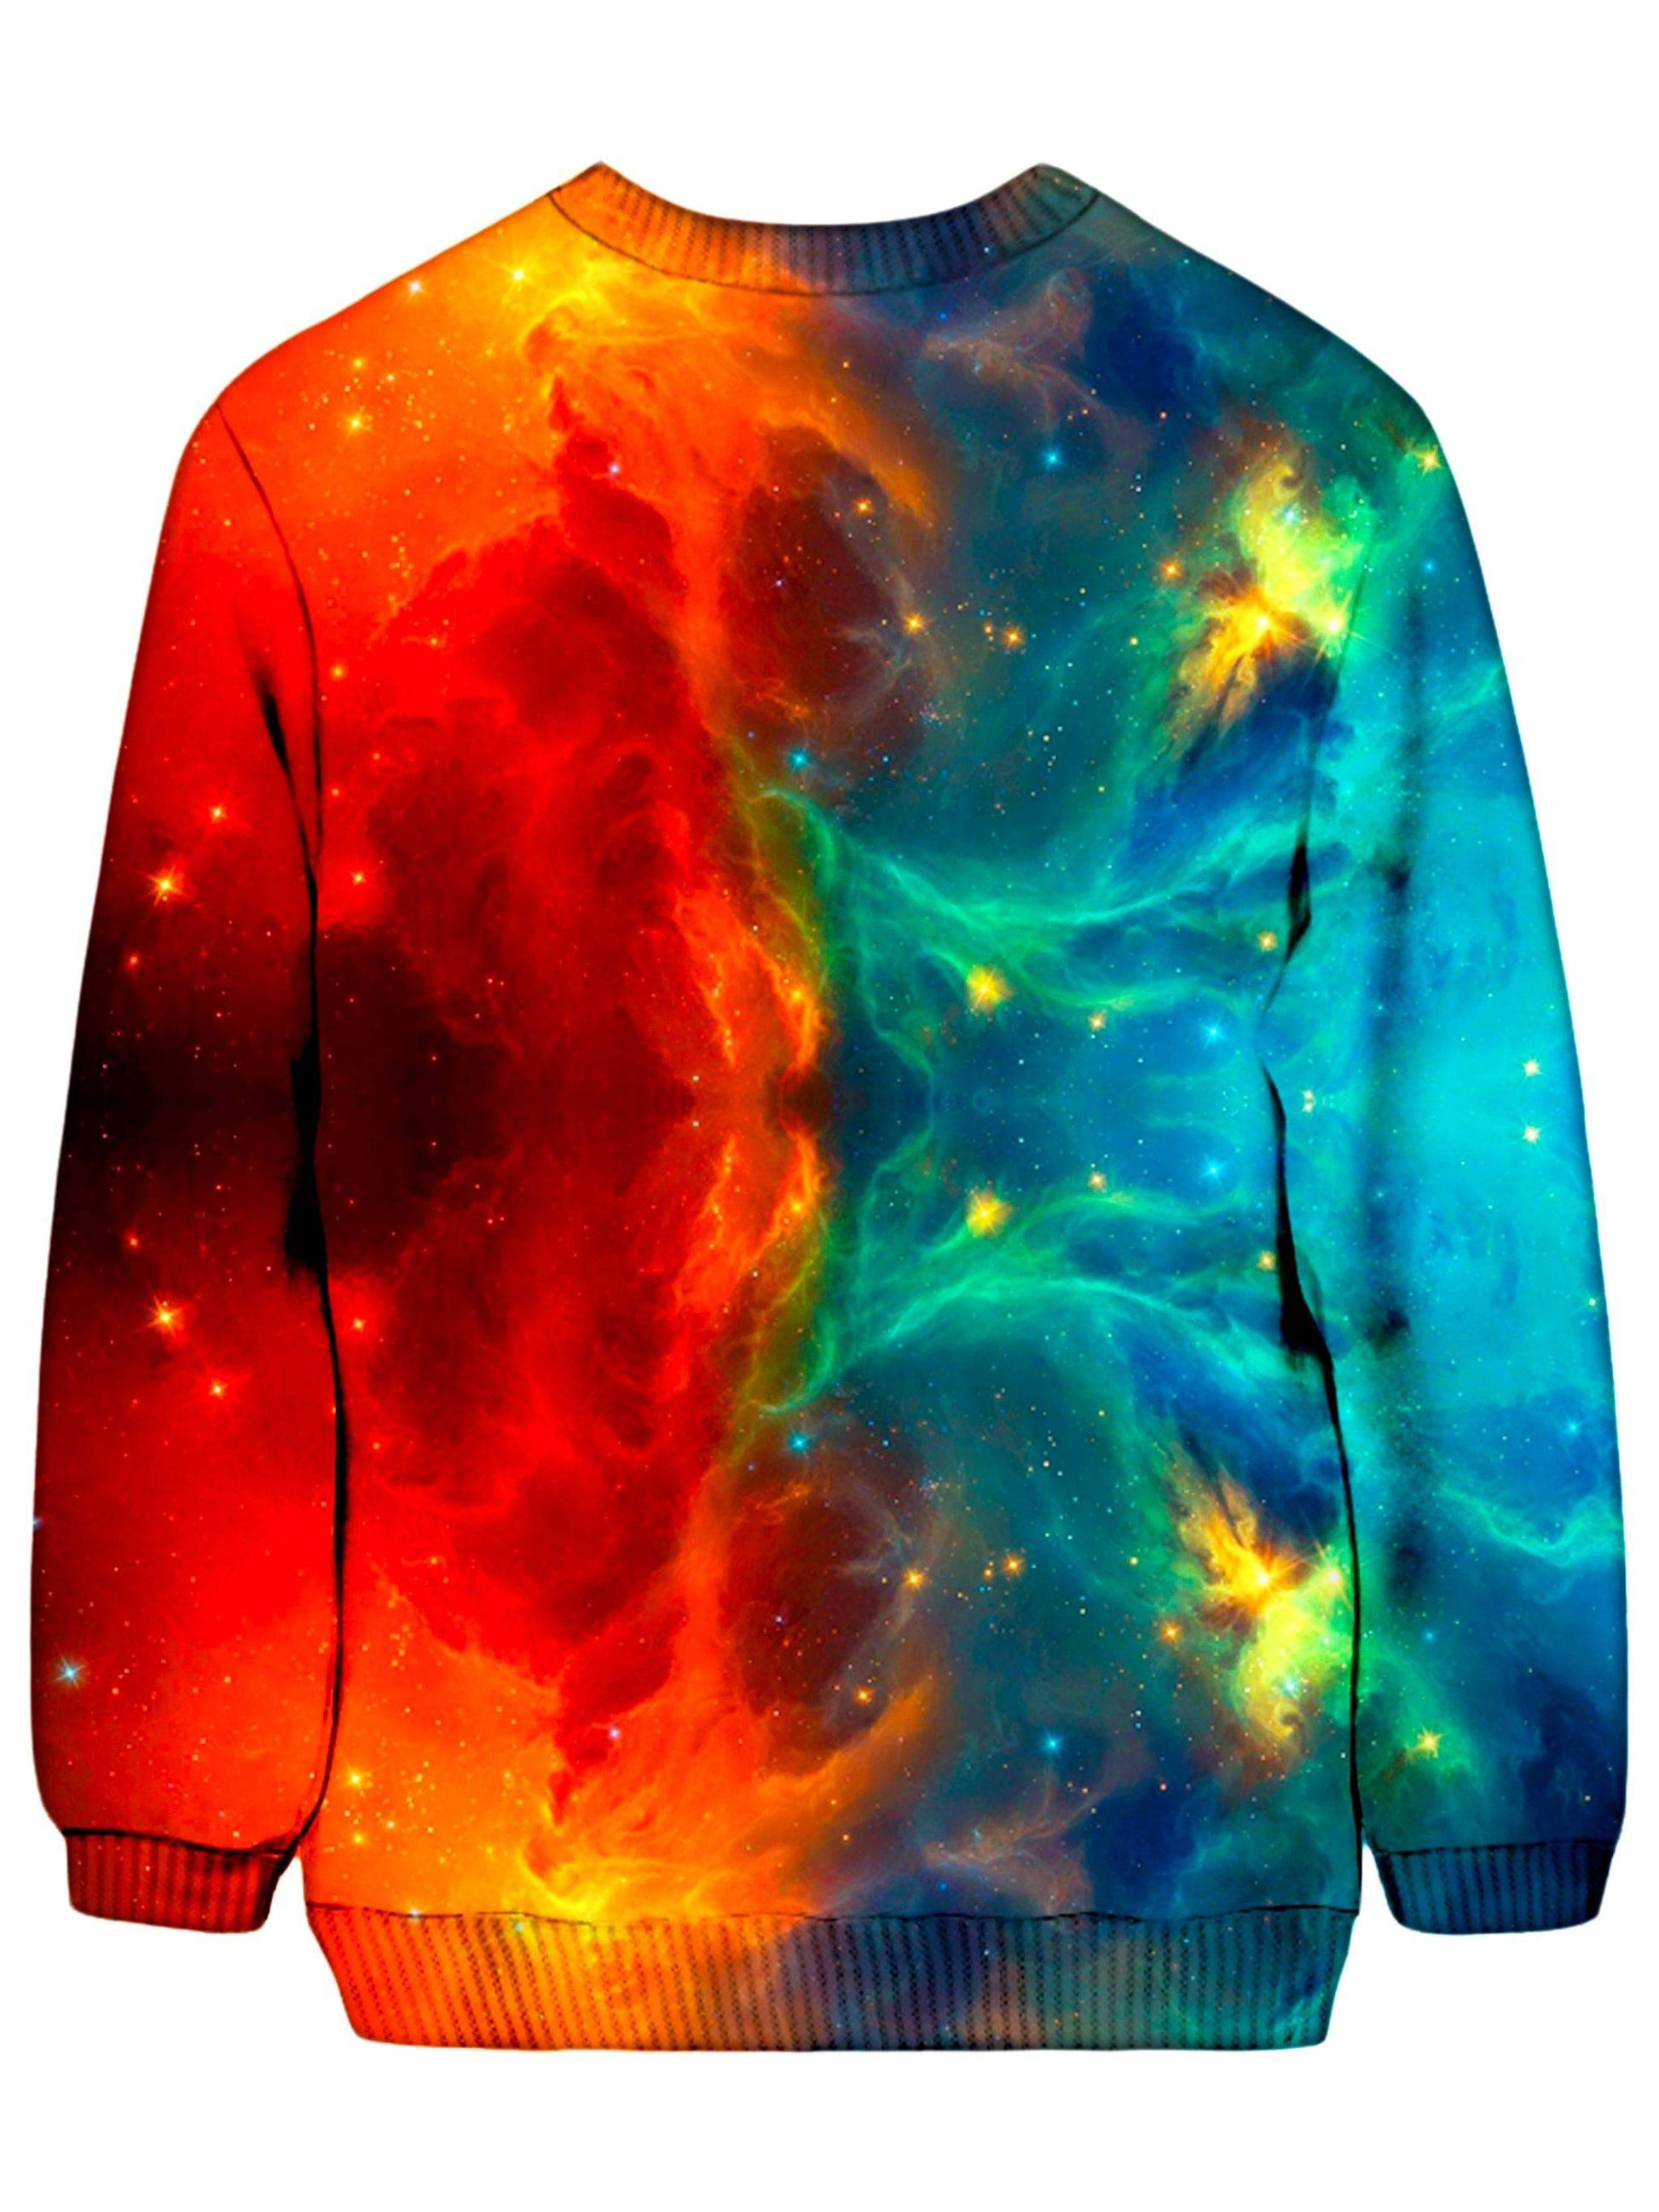 Fire and Ice Galaxy Sweatshirt, iEDM, | iEDM